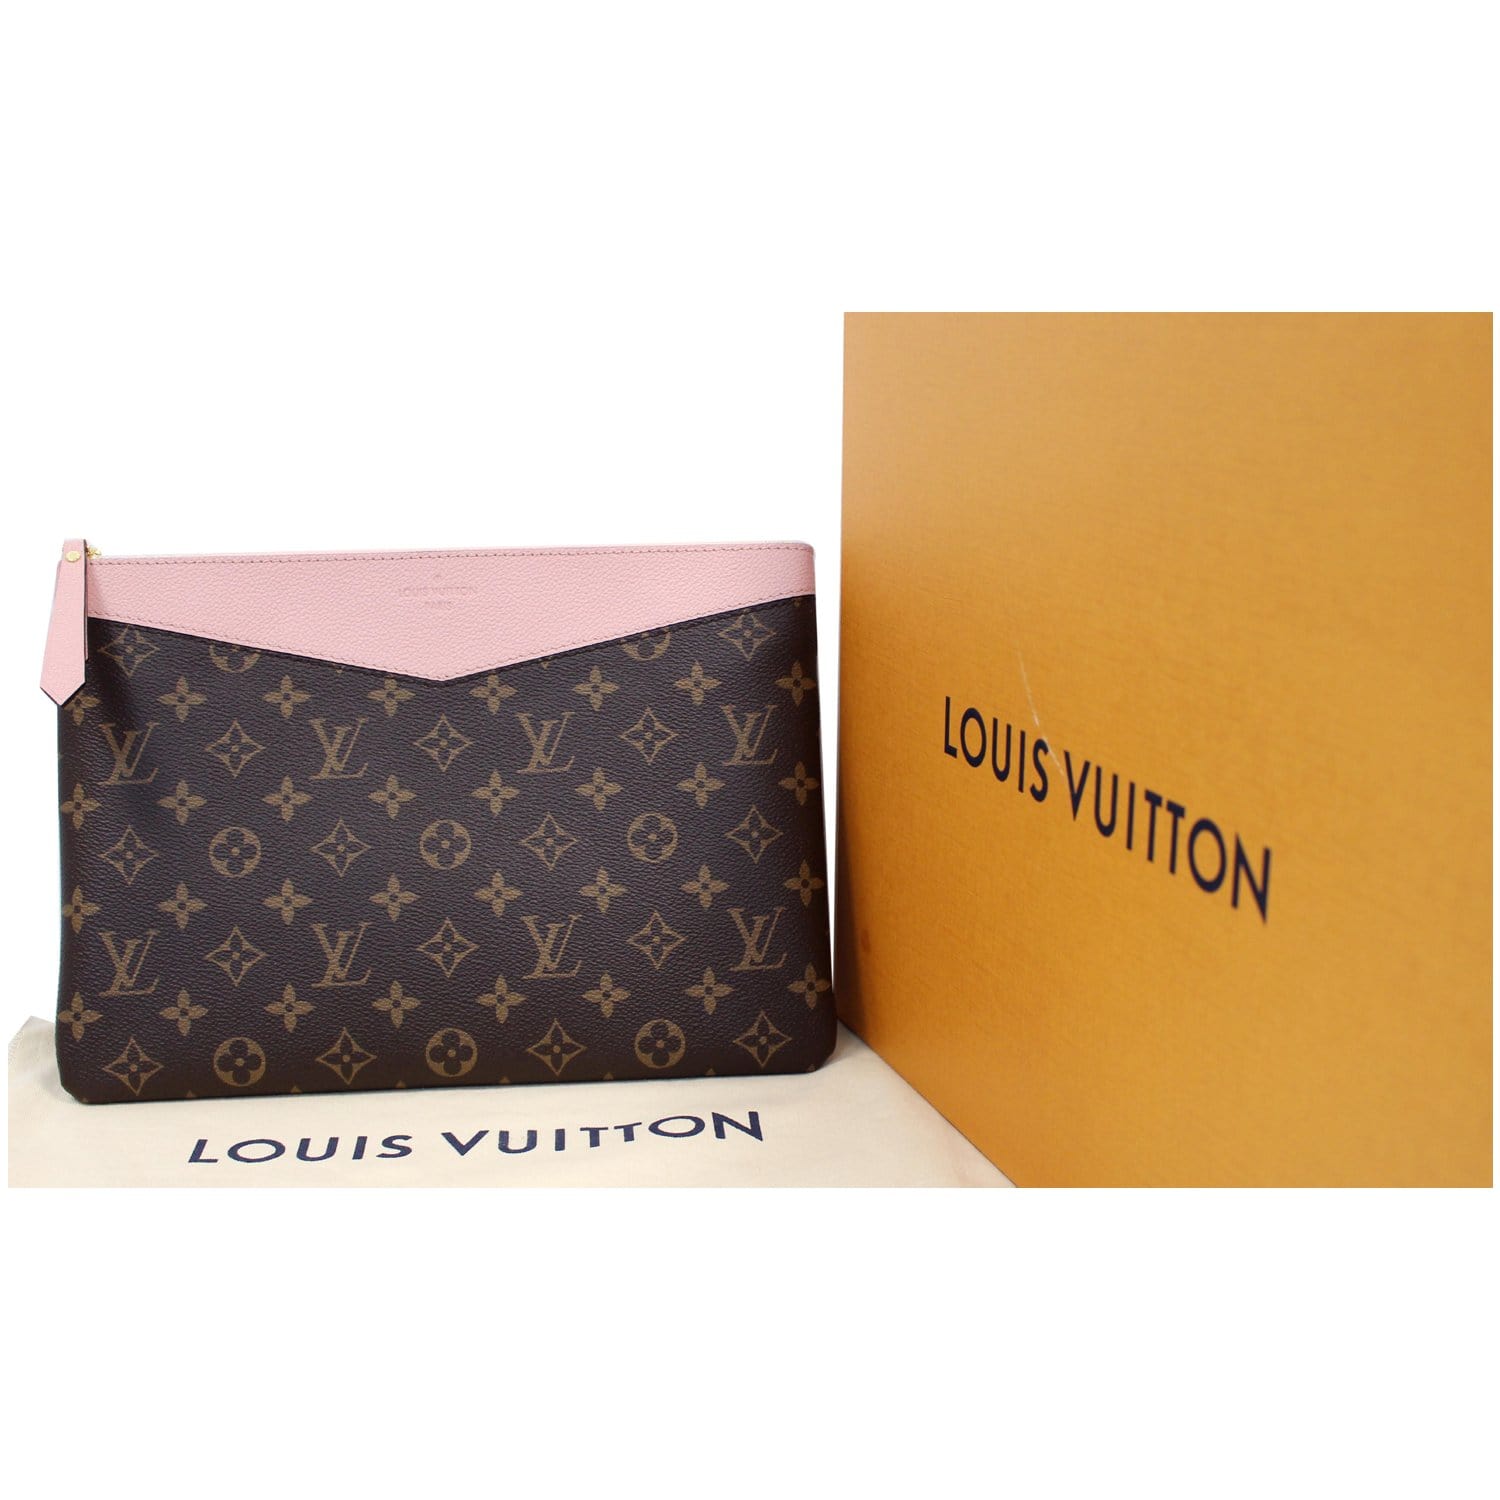 New! Louis Vuitton Damier Ebene Daily Pouch Clutch